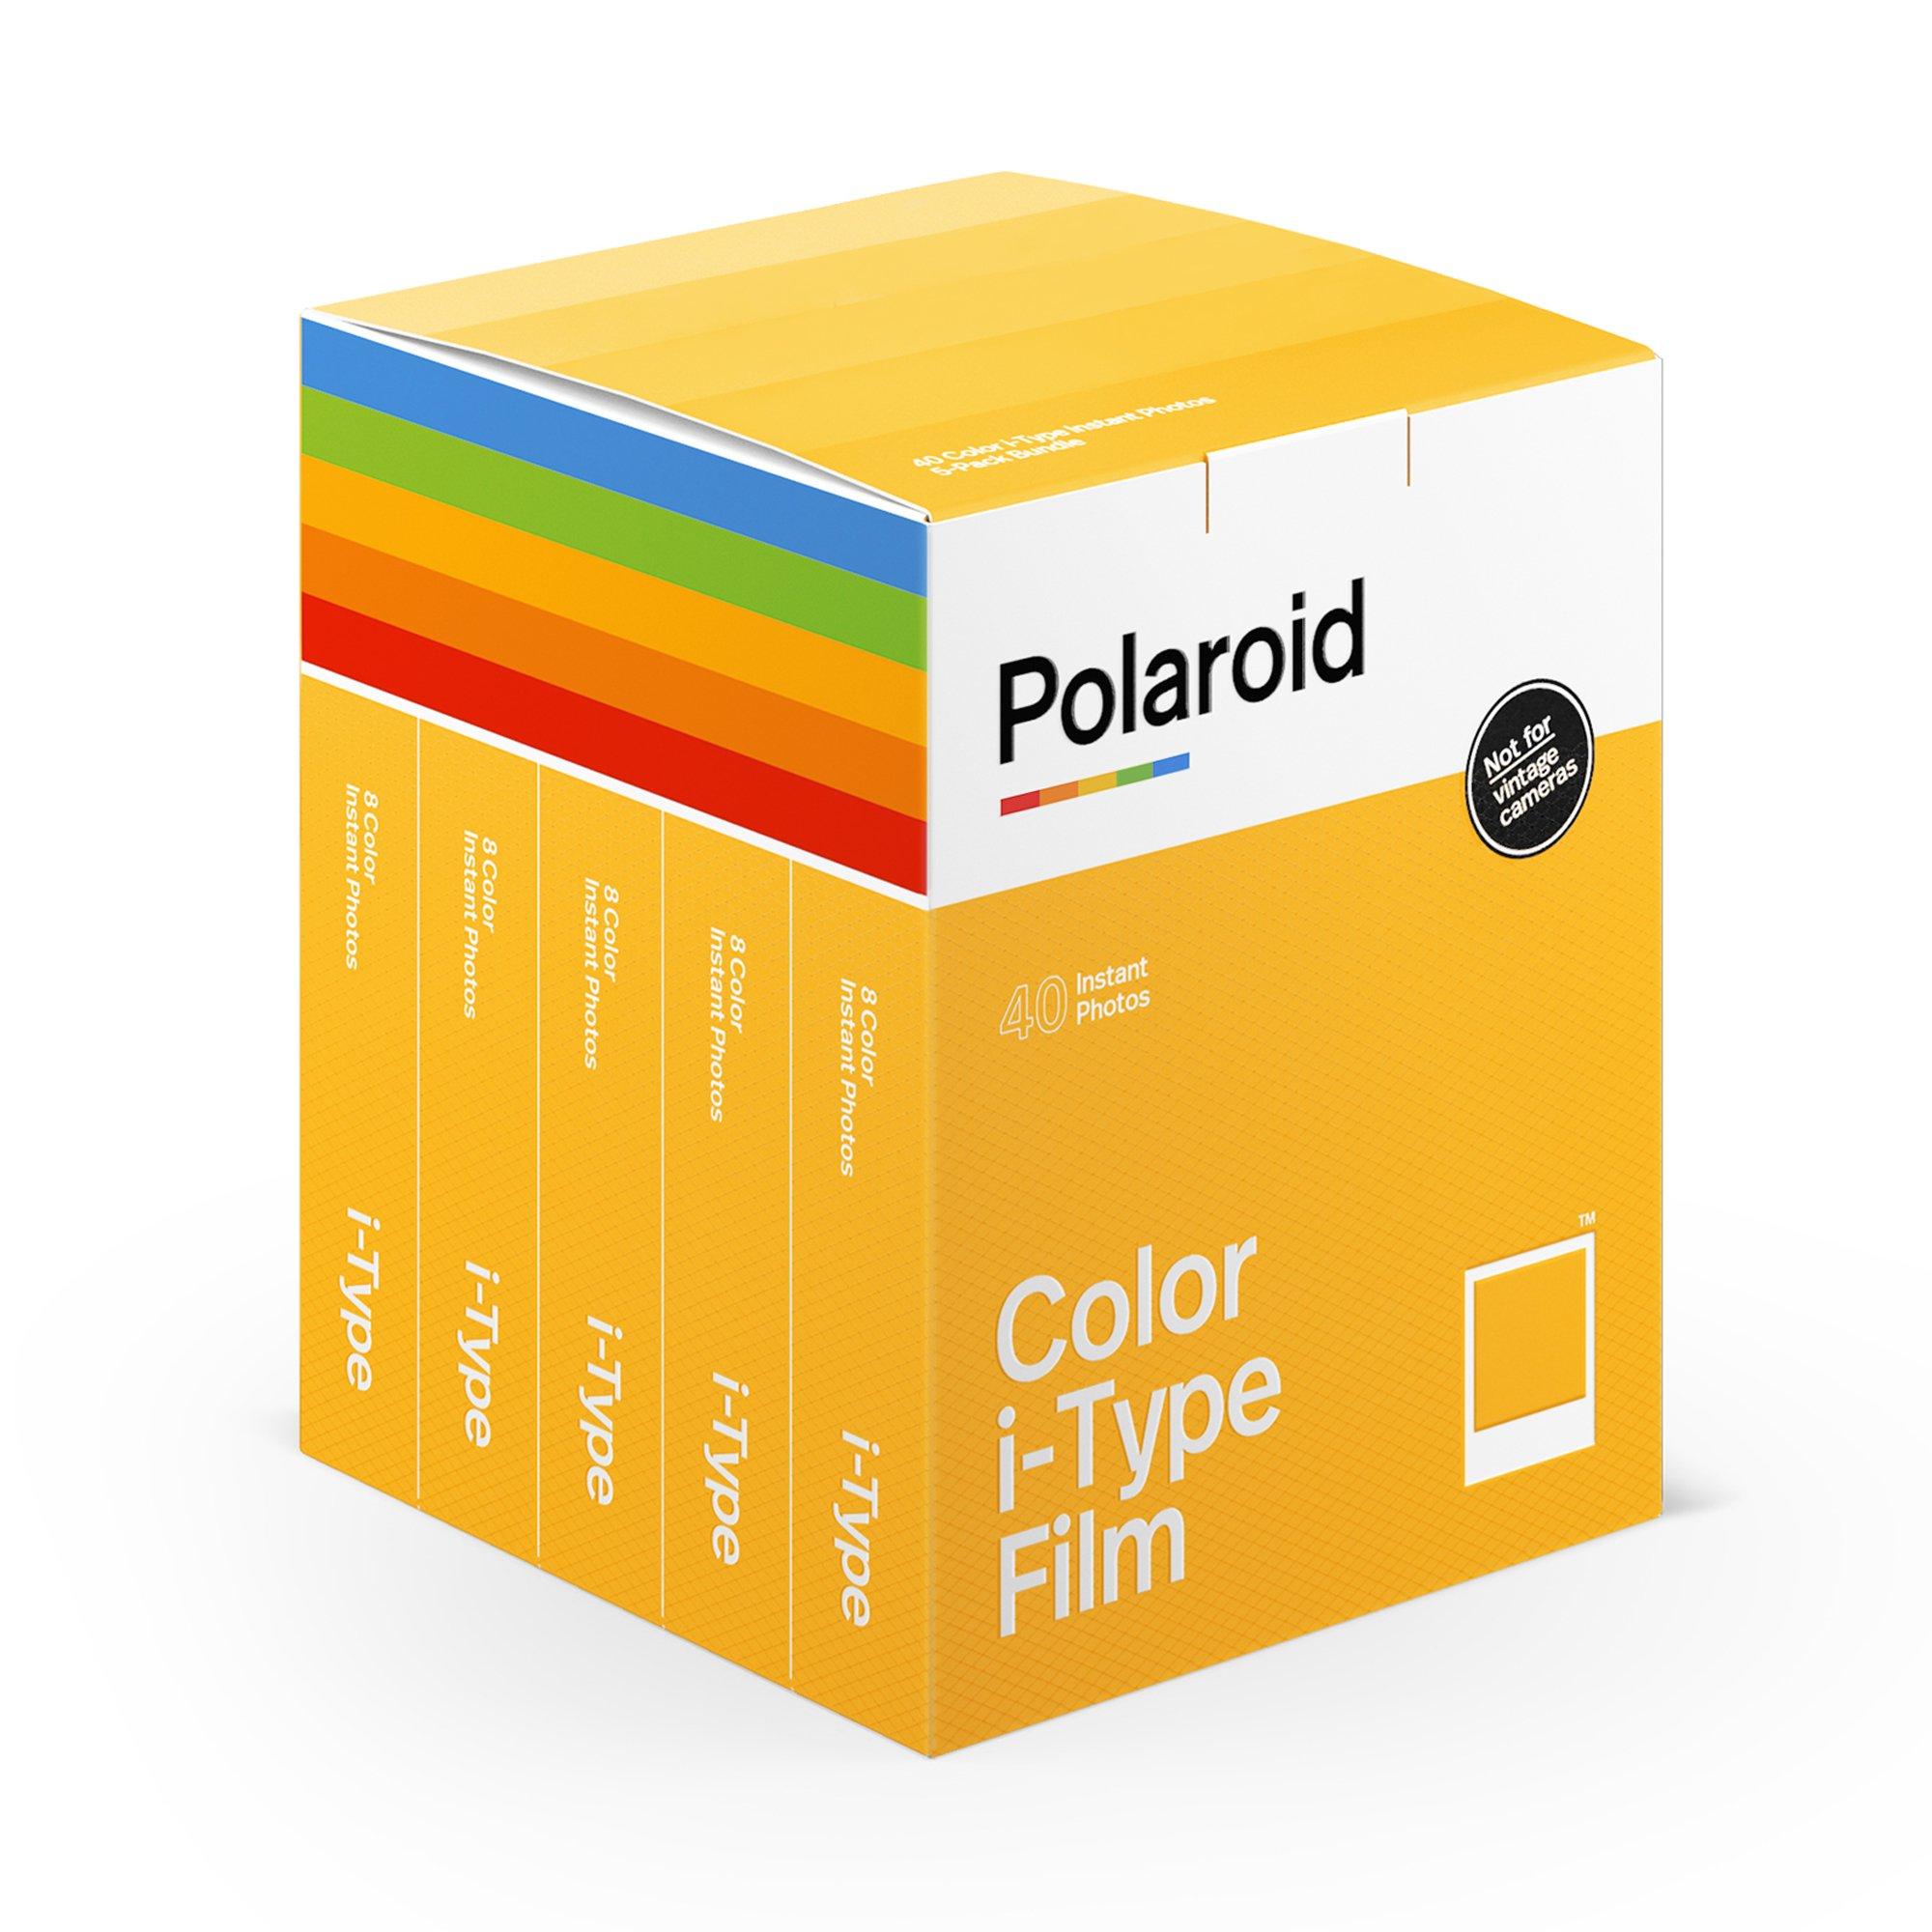 Image of Polaroid Color I-Type Film (5x8 Photos) Sofortbildfilme